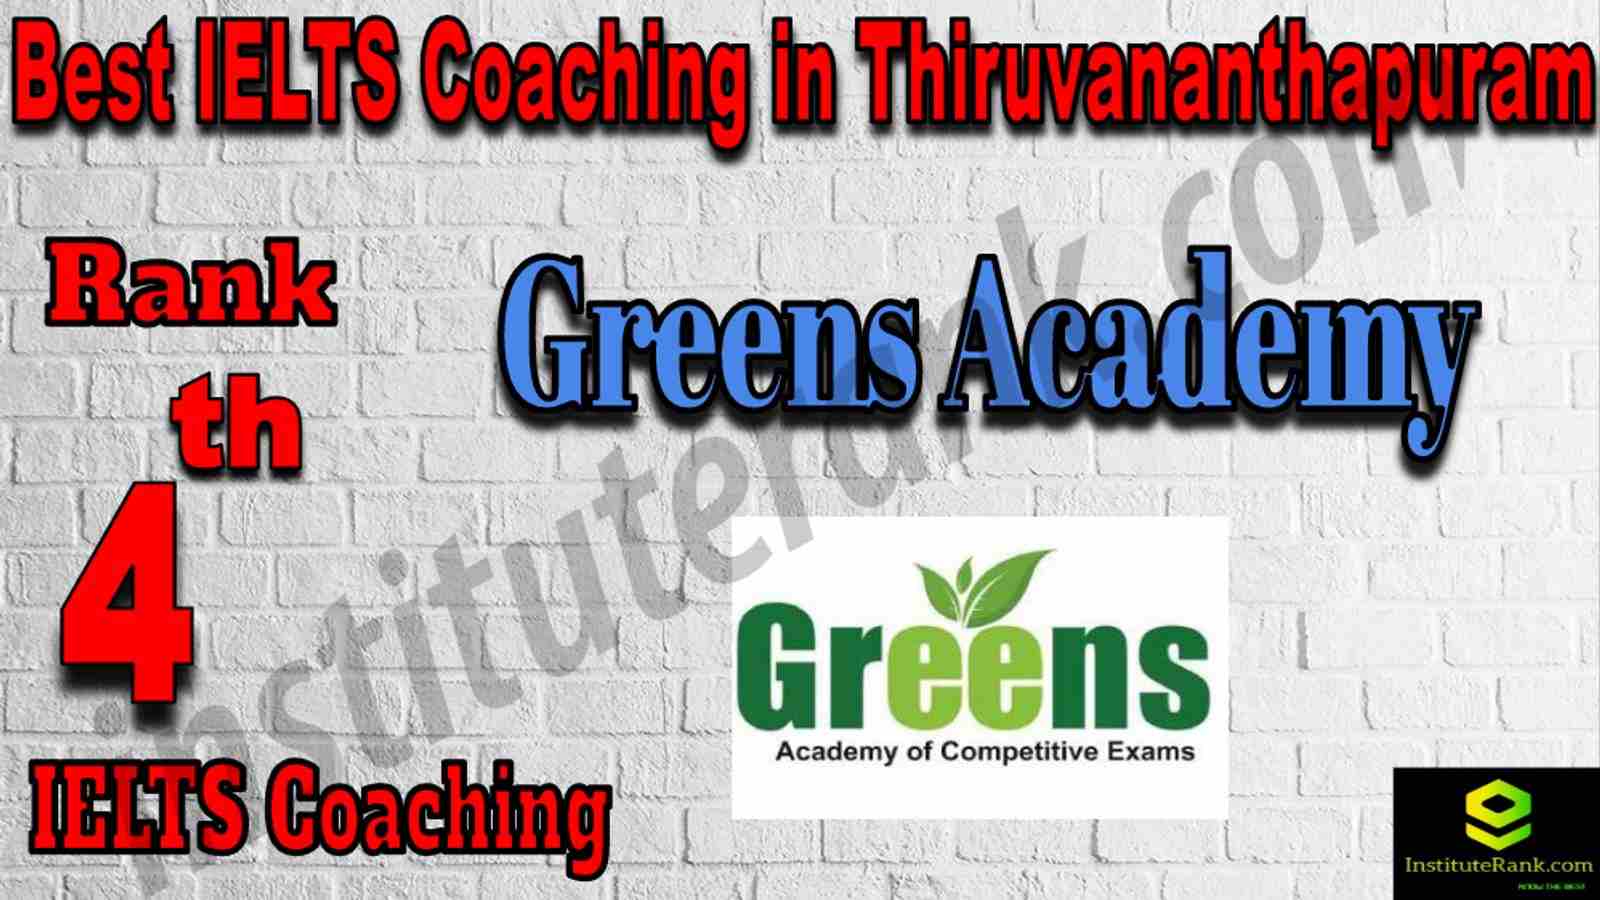 4th Best IELTS Coaching in Thiruvananthapuram